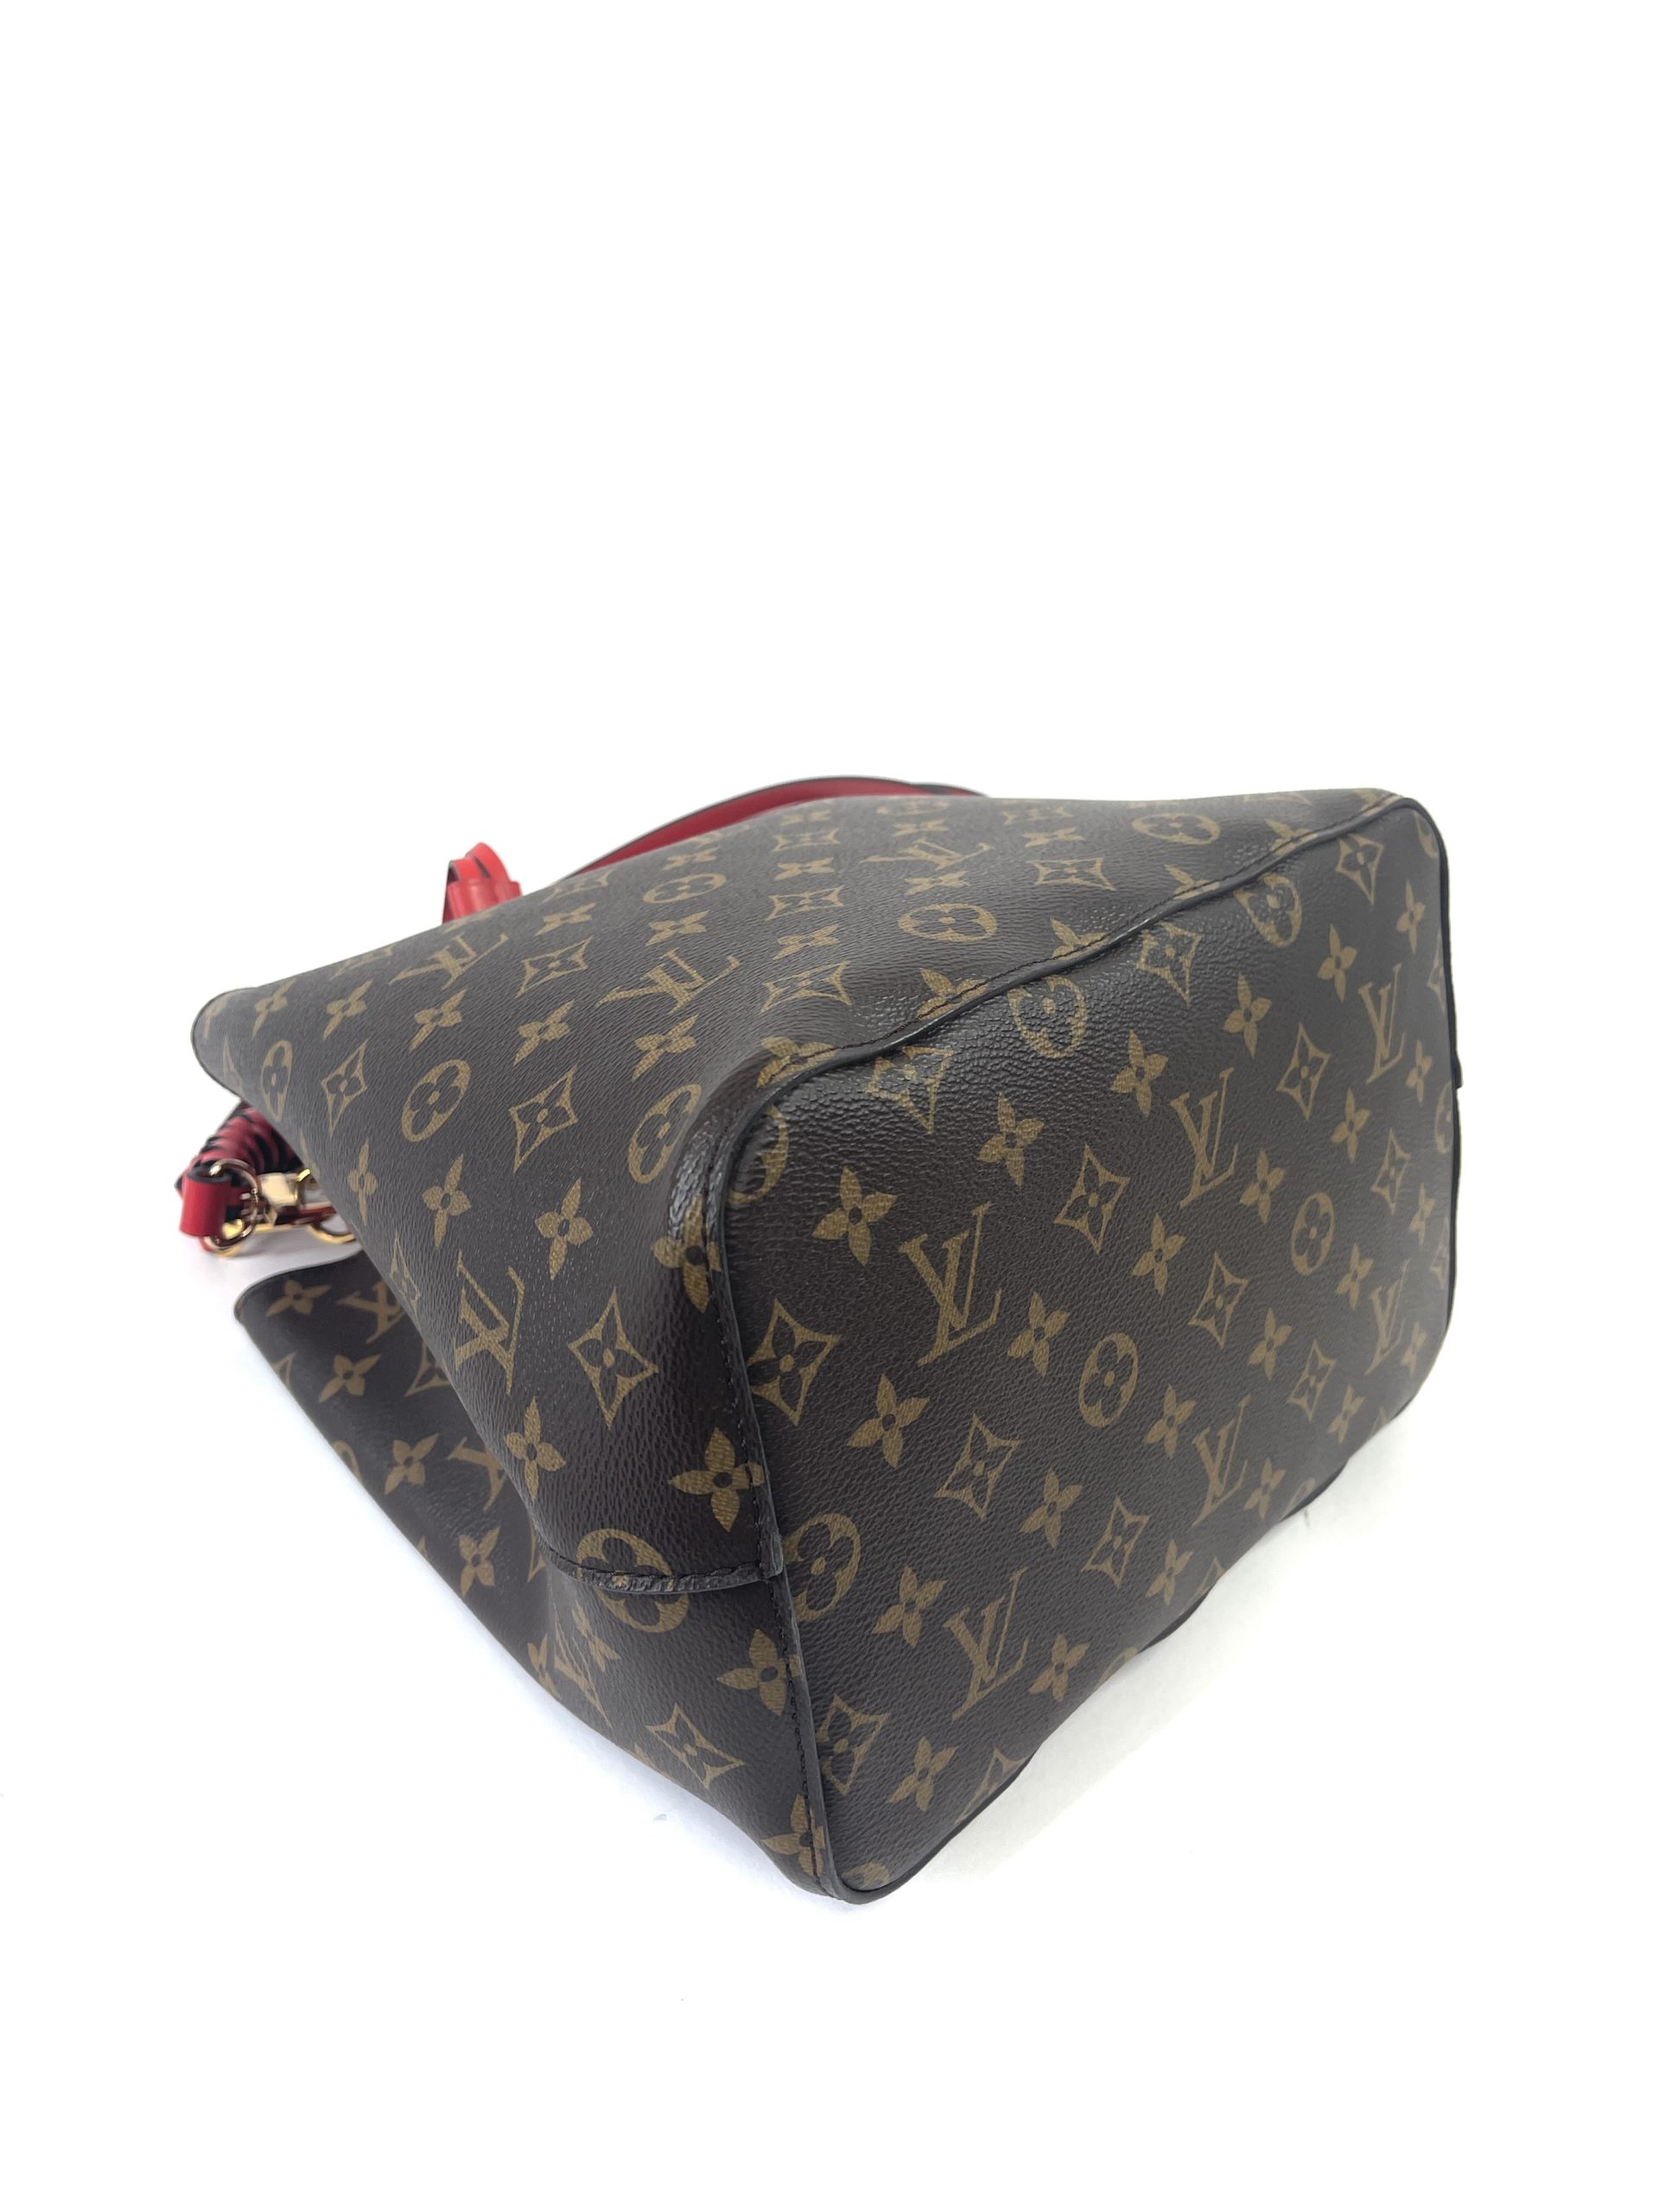 Louis Vuitton Red Monogram Shoulder Bag